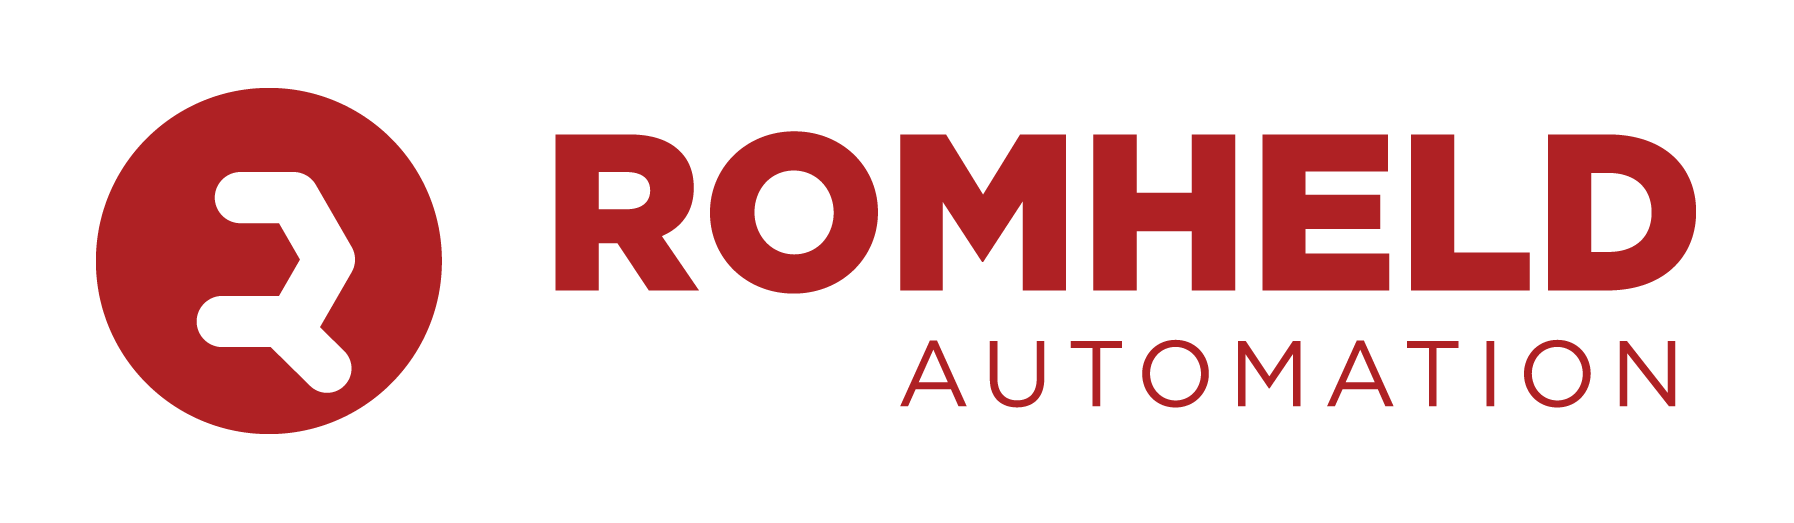 Romheld Automation